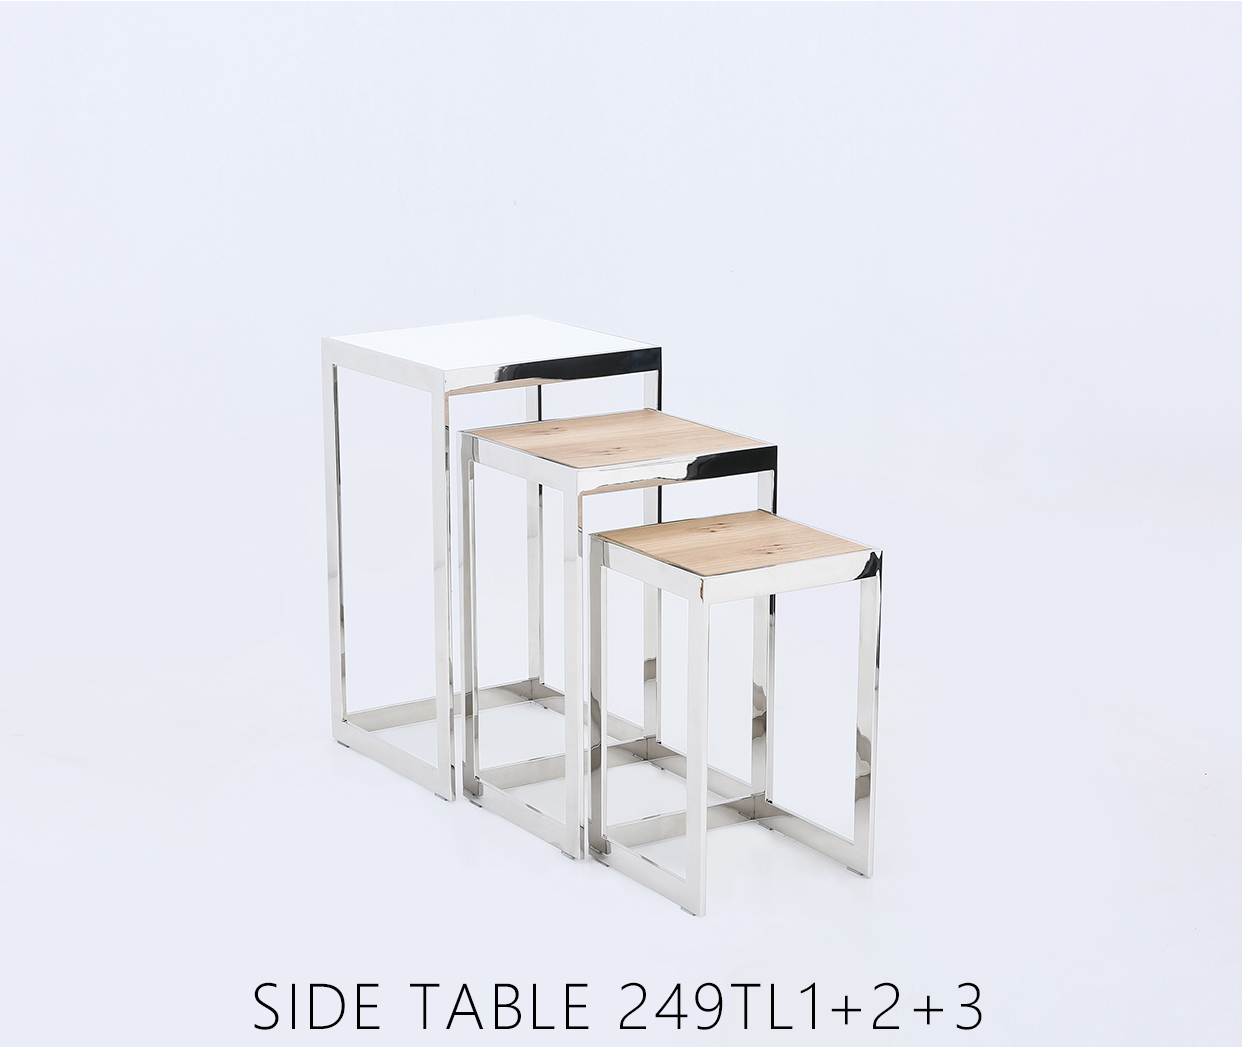 SIDE TABLE 249TL1+TL2+TL3